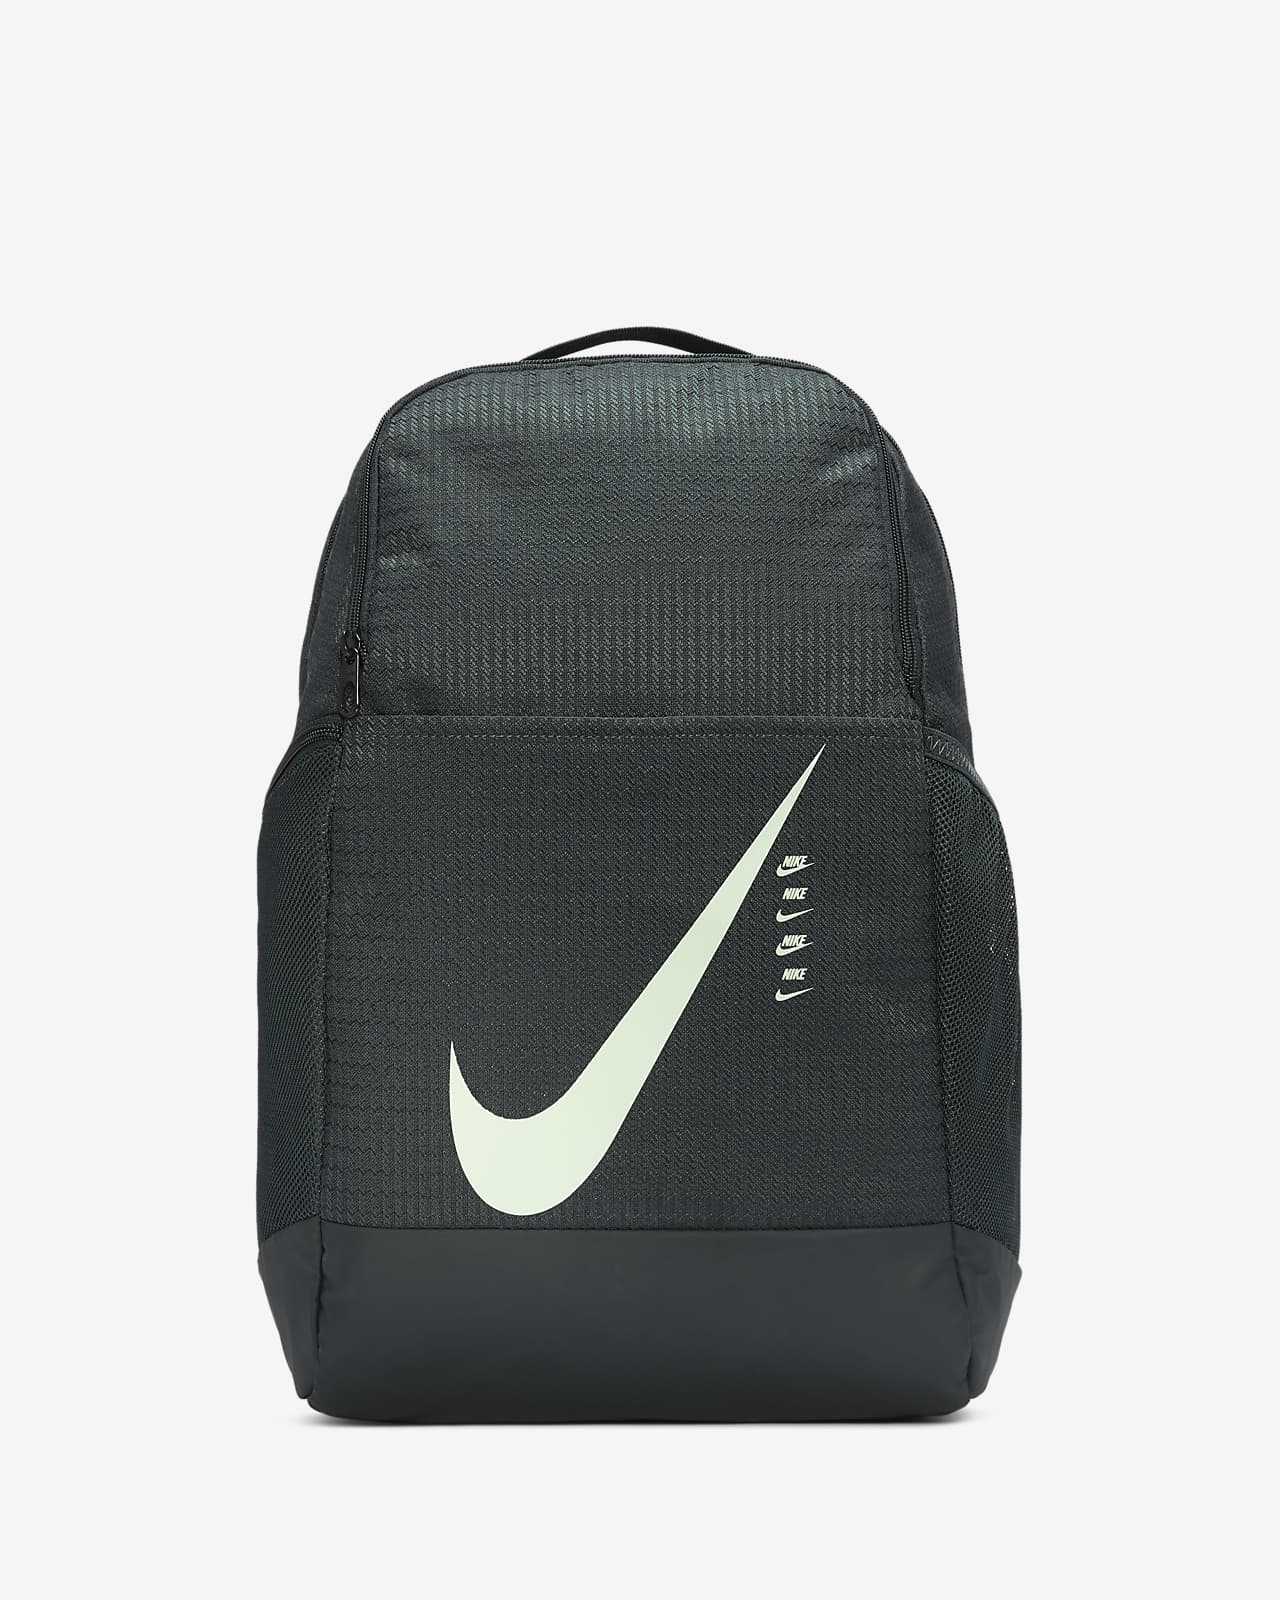 nike brasilia backpack medium black